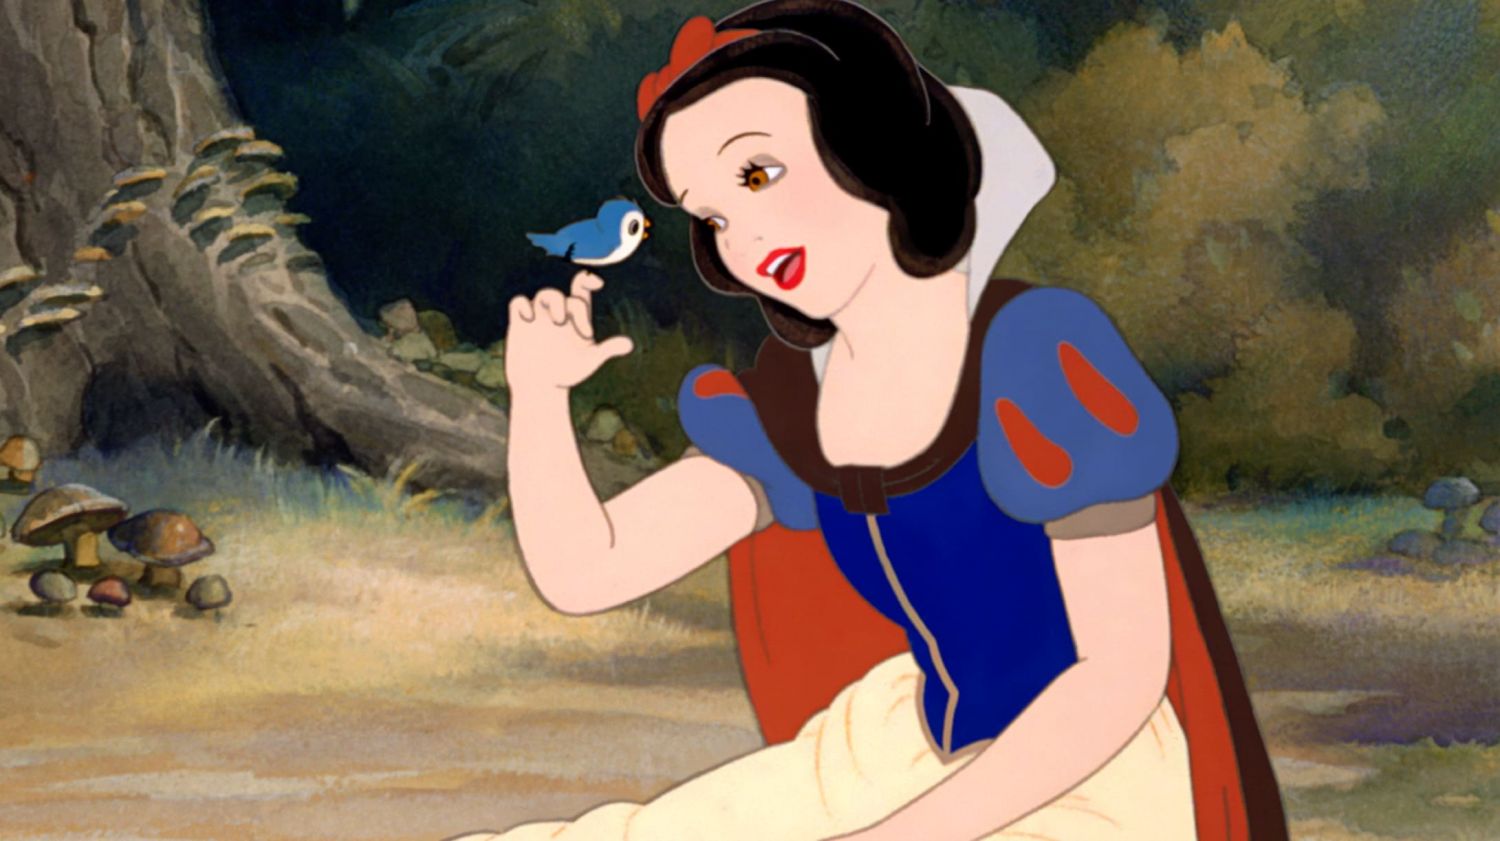 Disney Casts West Side Story's Rachel Zegler As Snow White In Live